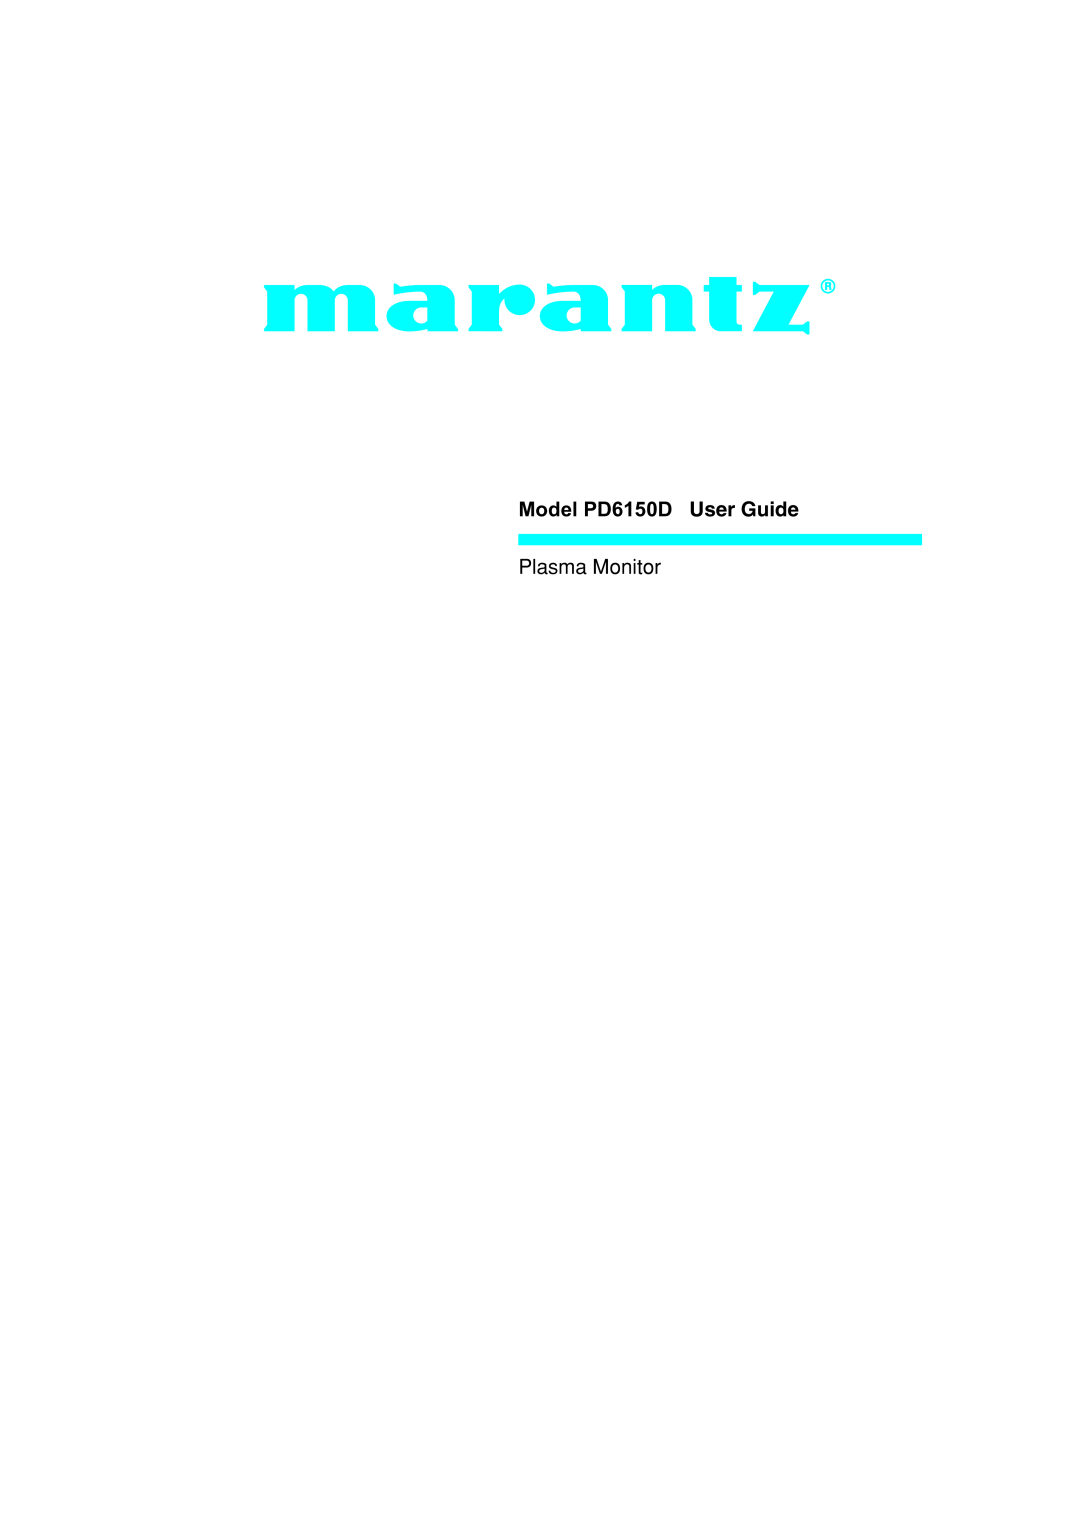 Marantz manual Model PD6150D User Guide, Plasma Monitor 